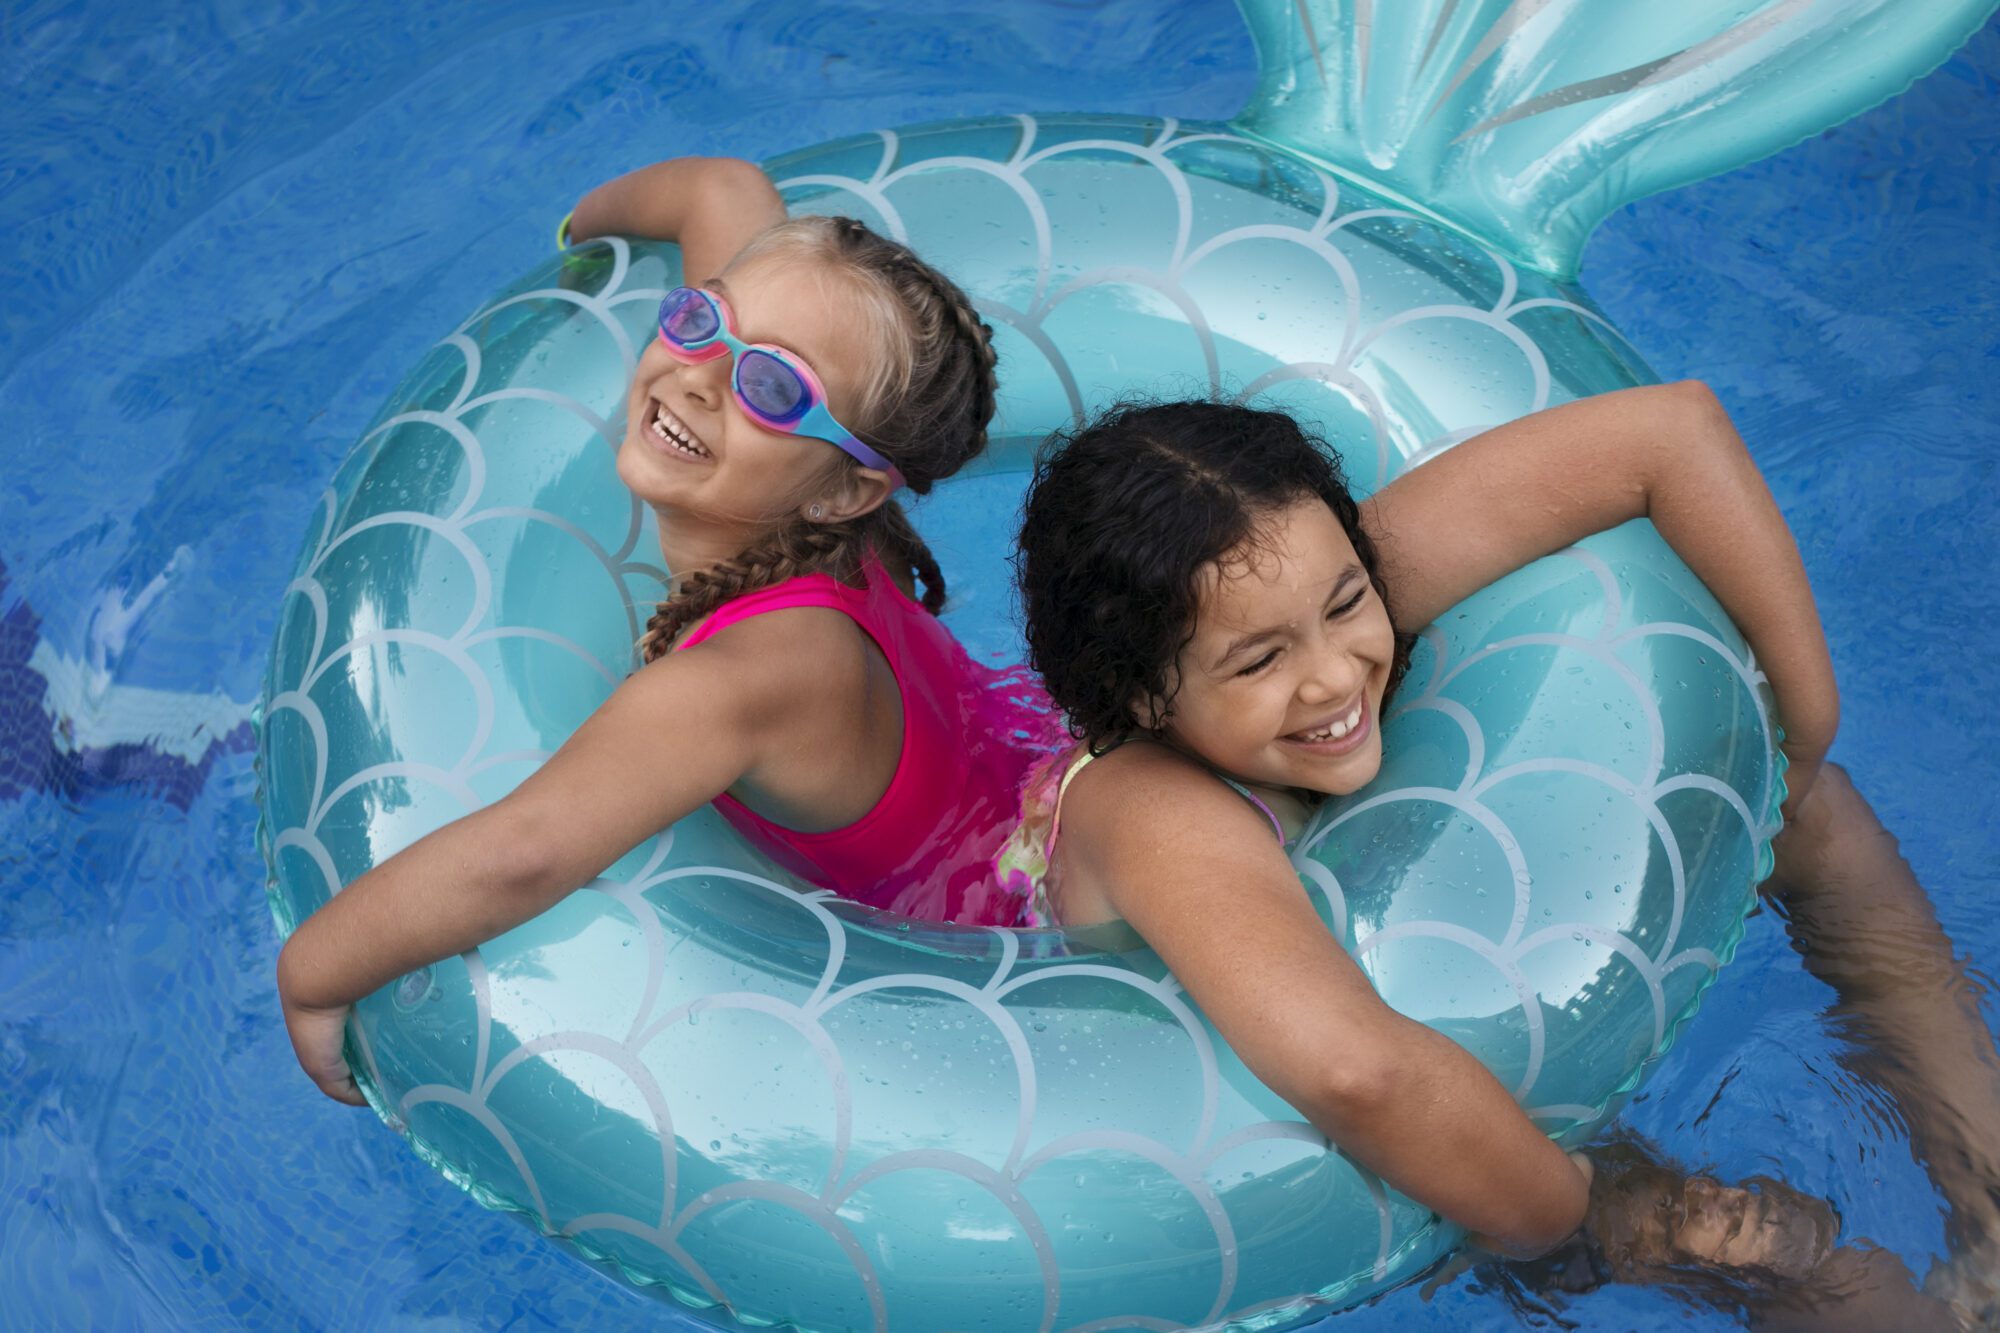 Kids having fun in insured pool at home